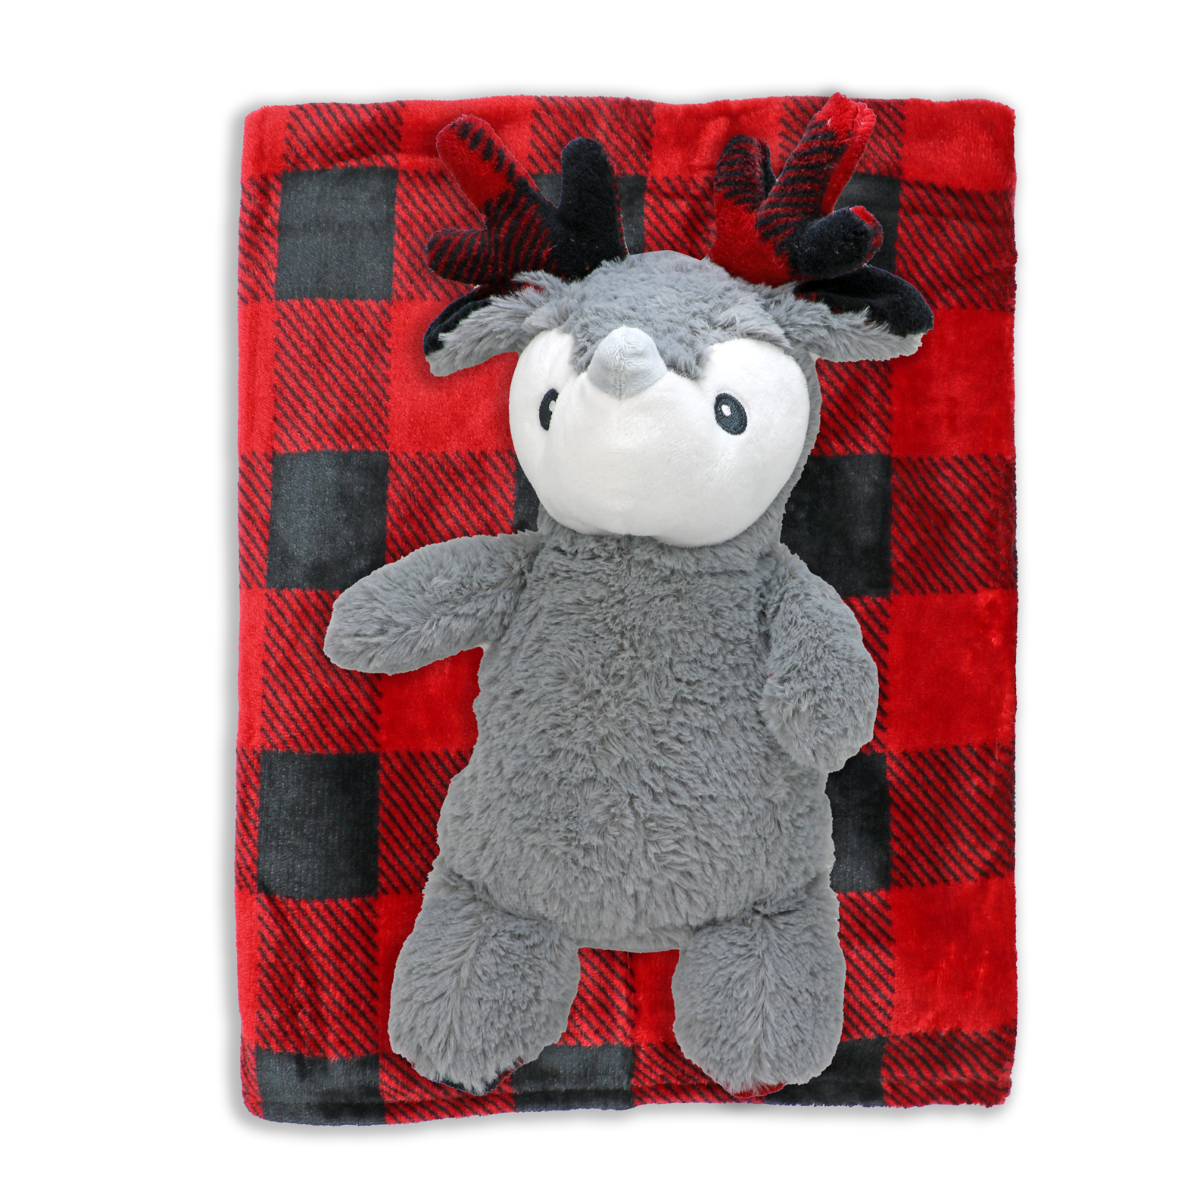 Reindeer Plush Toy with Blanket Set - ittybittybubba